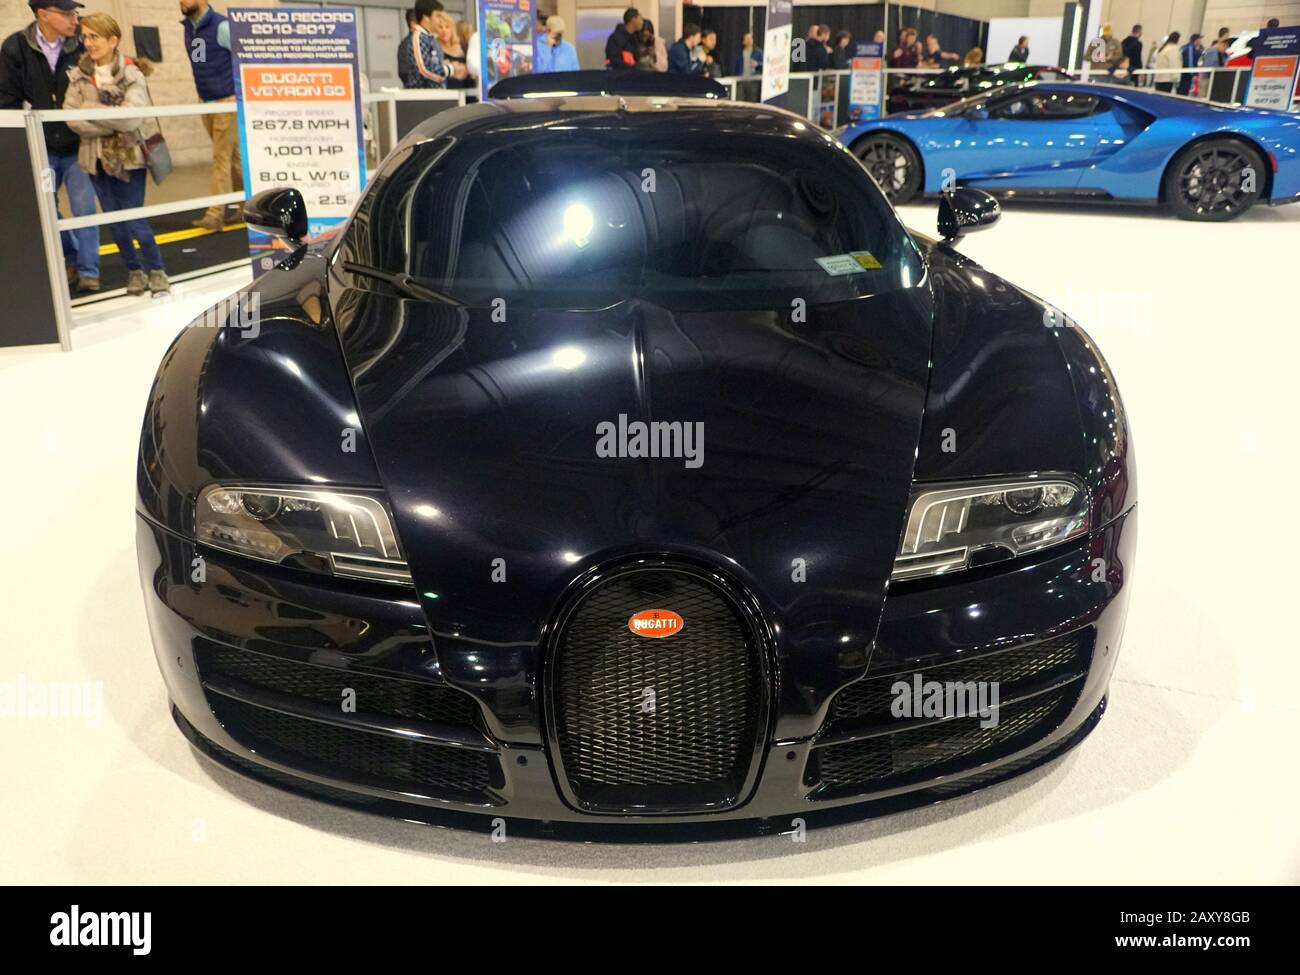 hi-res Black bugatti and veyron Alamy stock photography - images